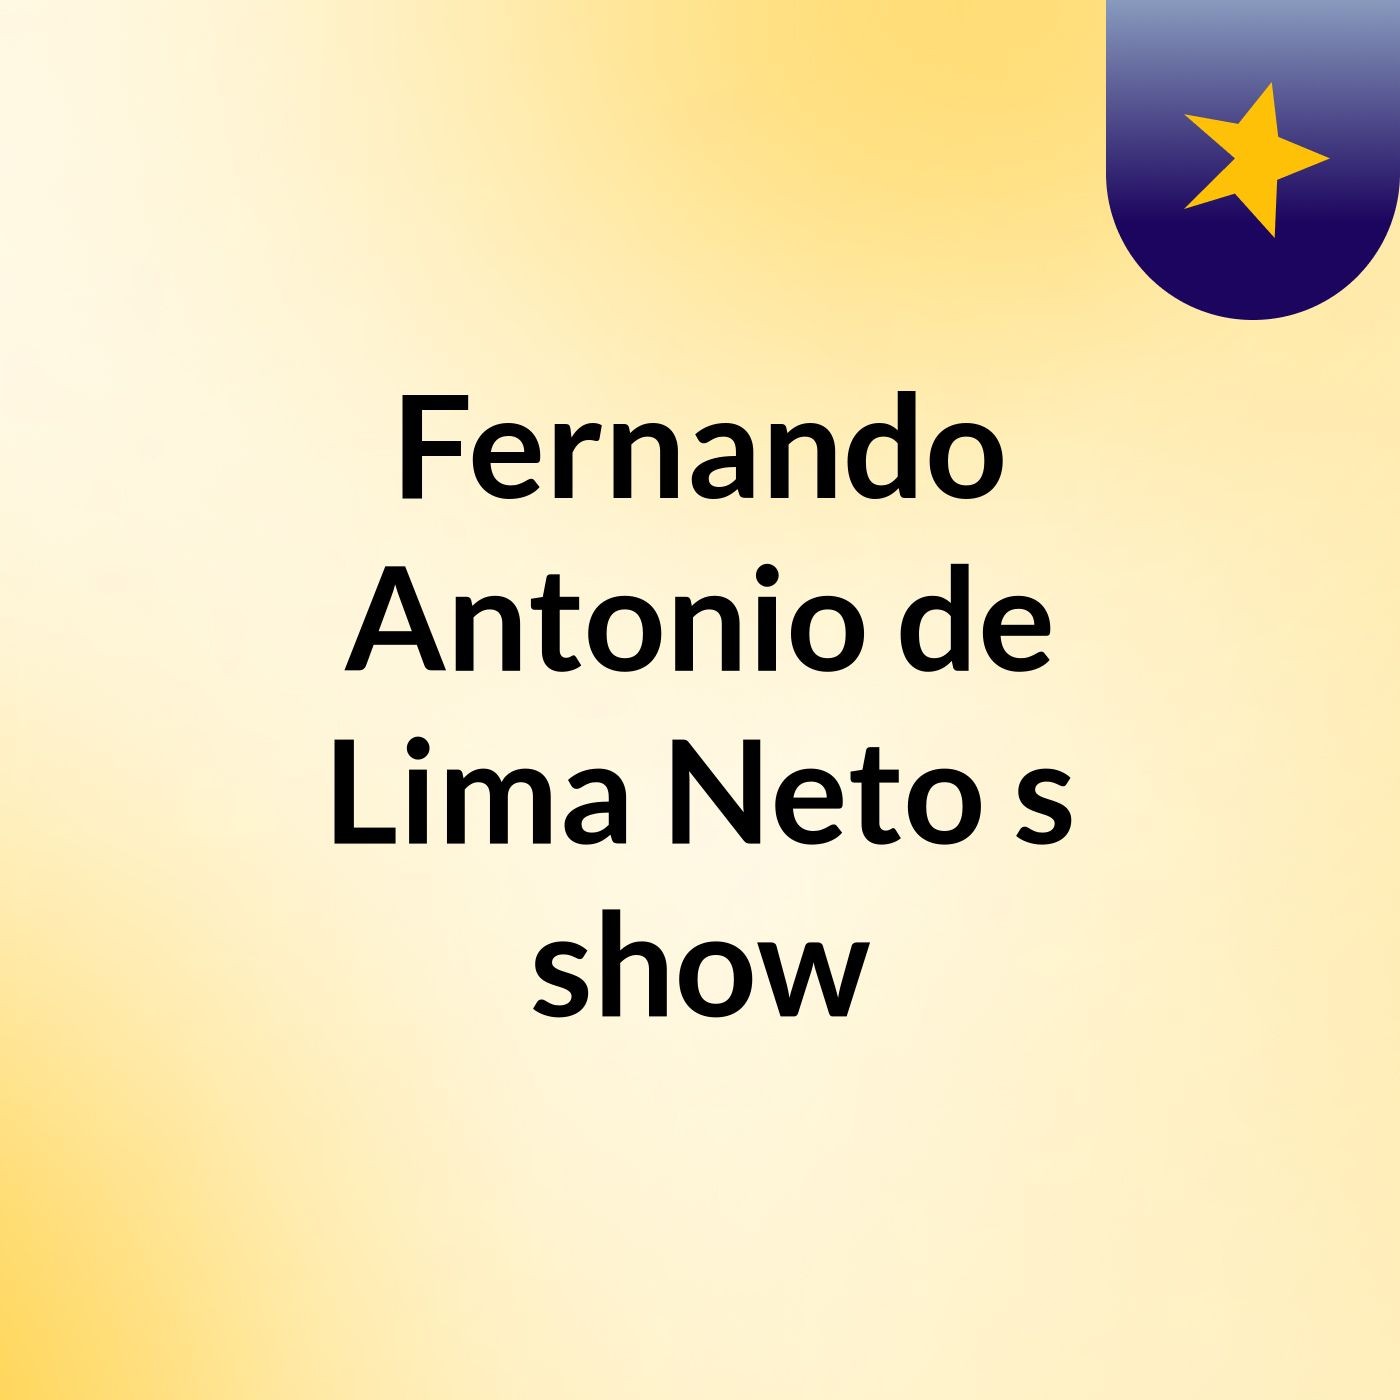 Fernando Antonio de Lima Neto's show